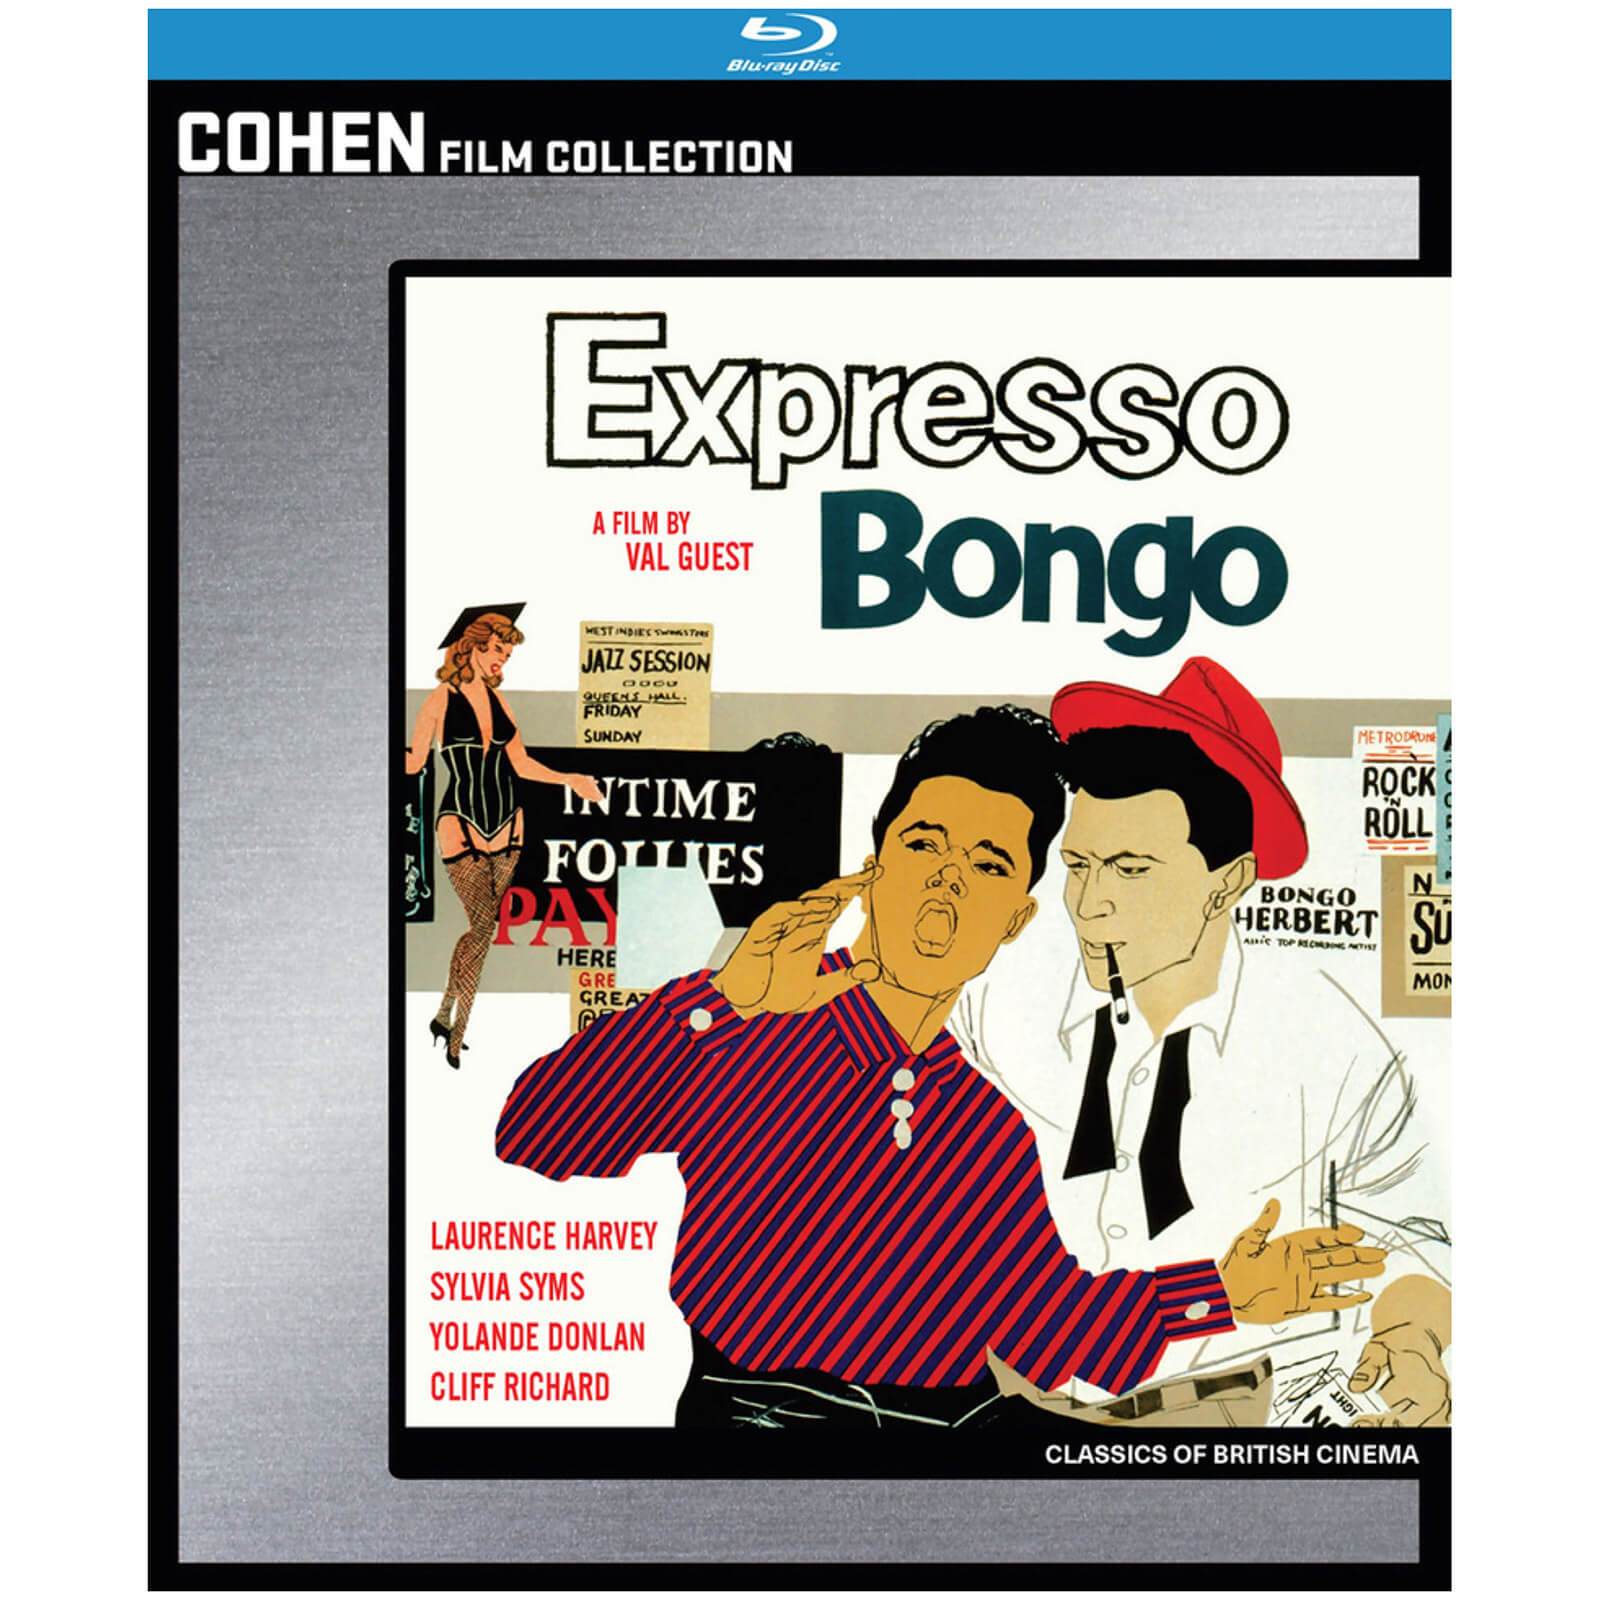 Expresso Bongo (US Import) von Cohen Media Group